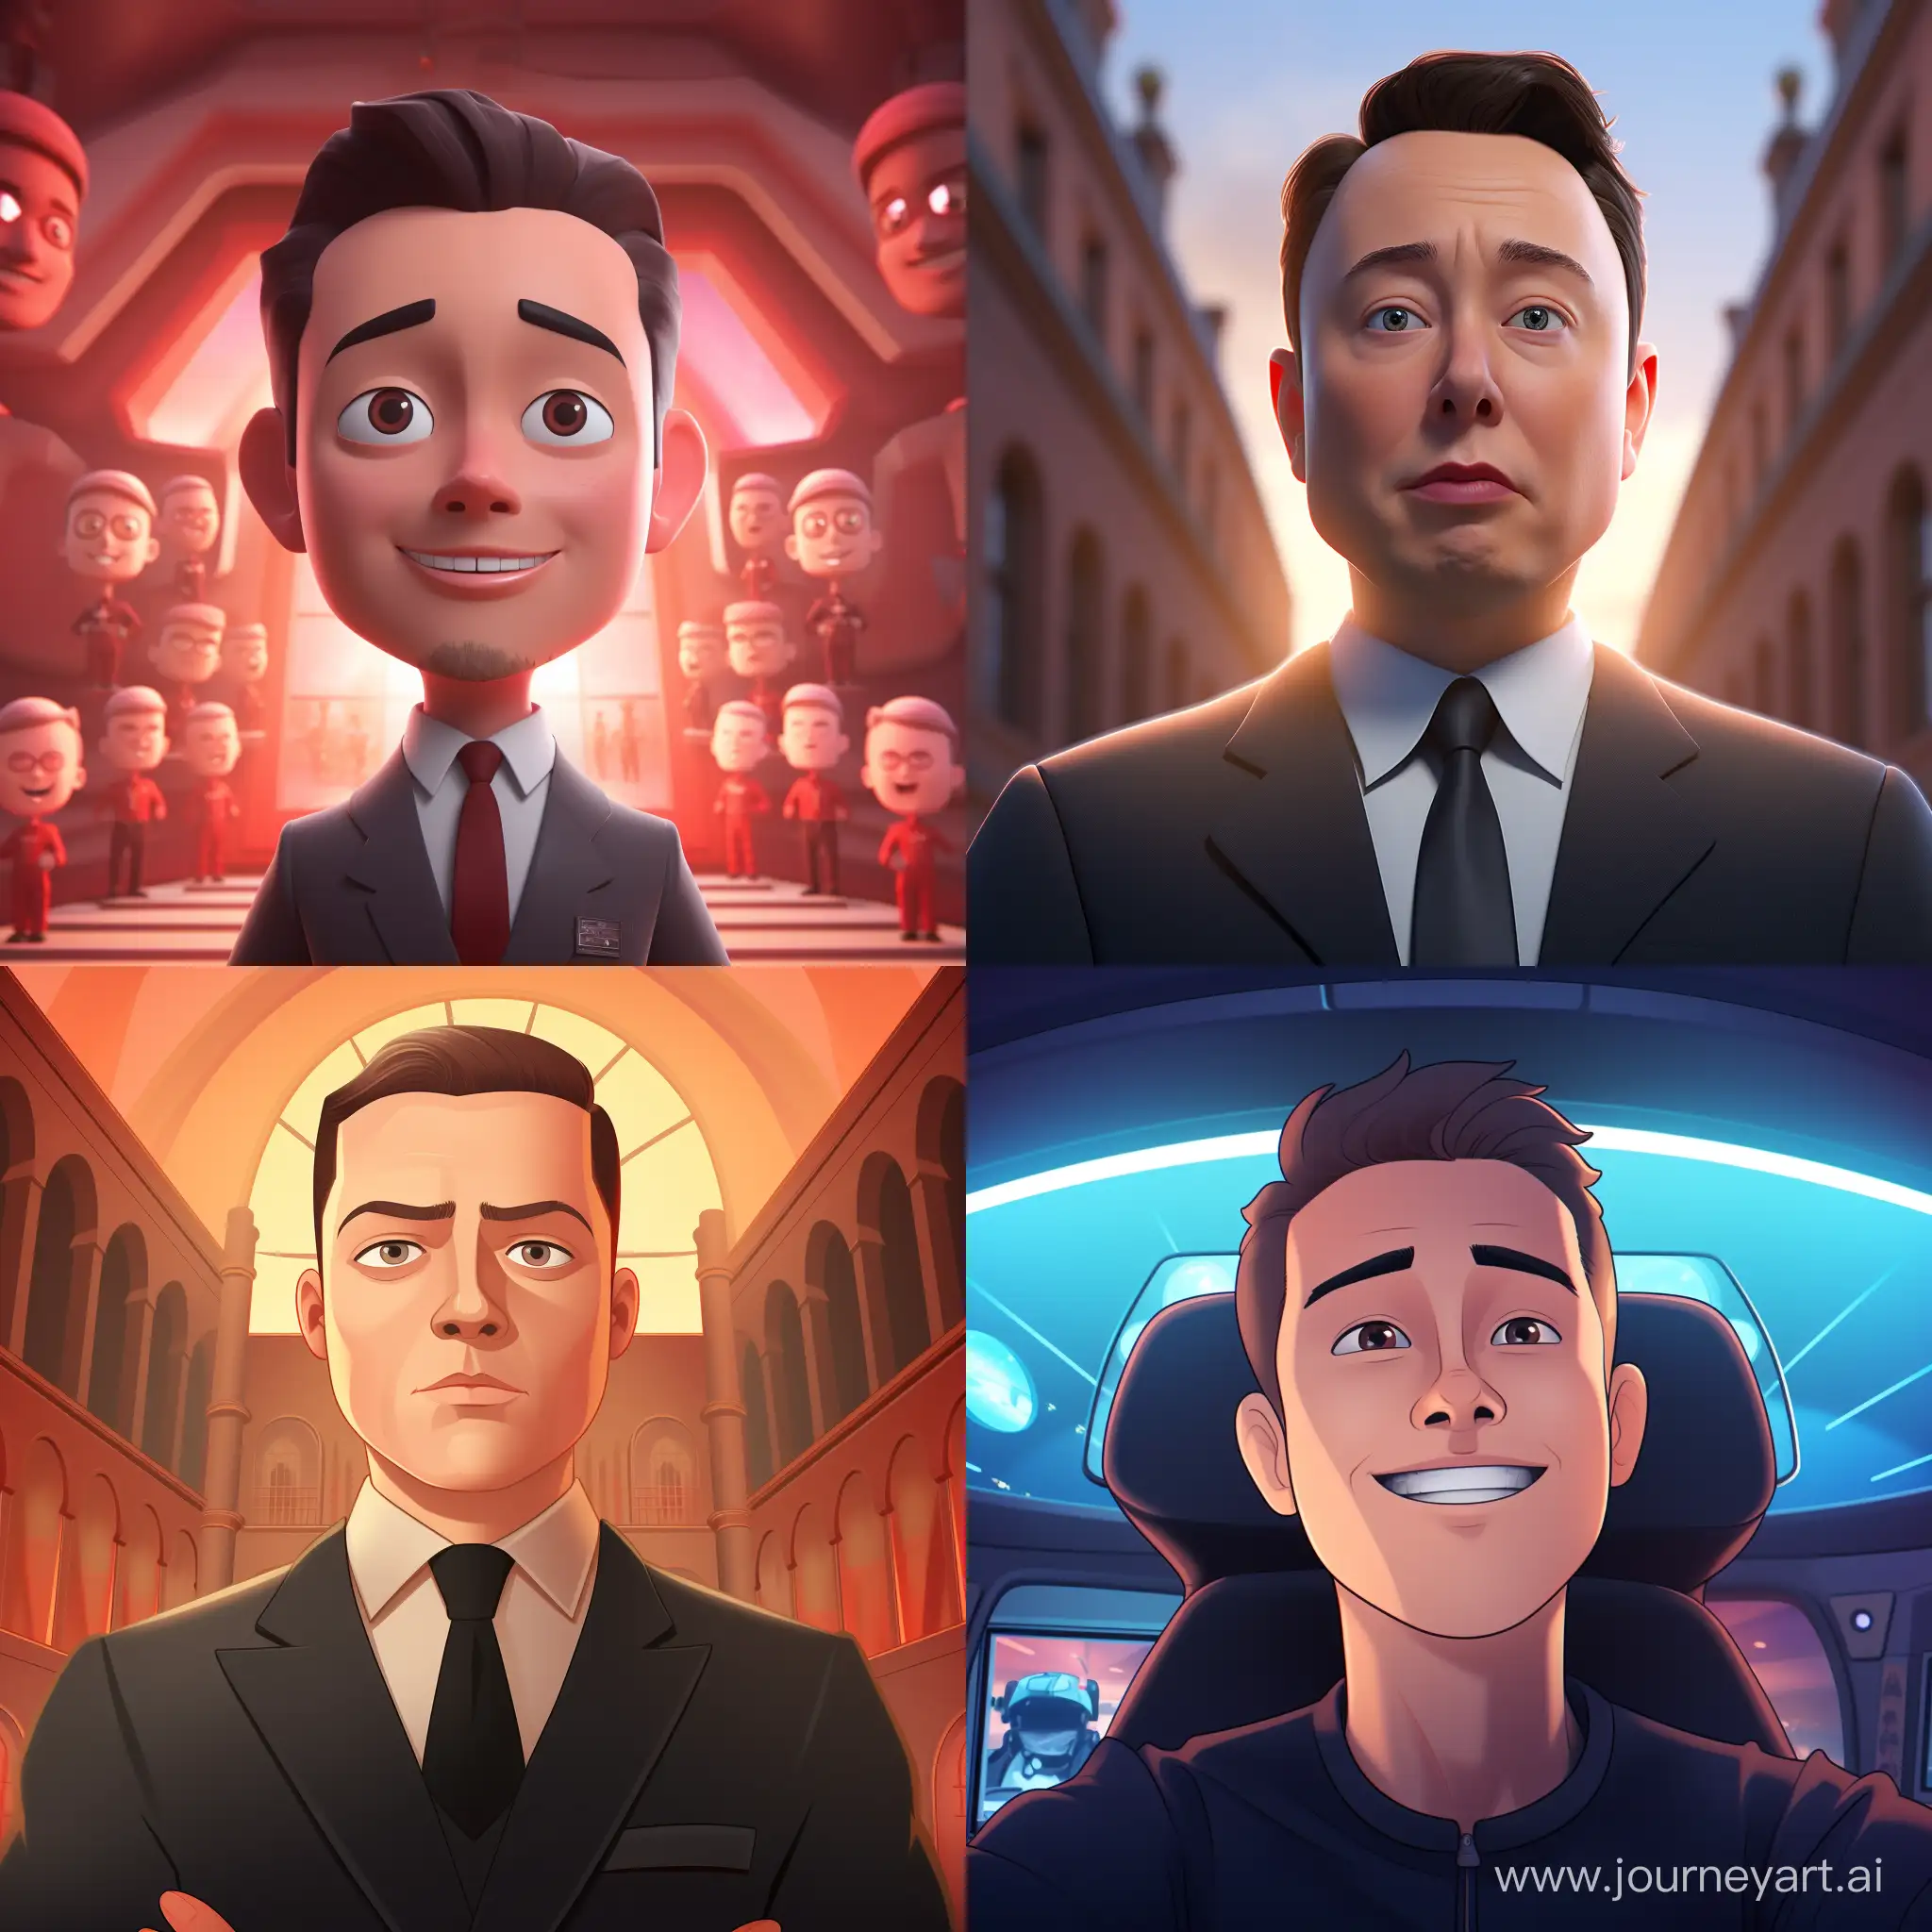 Elon-Musk-Animated-Portrait-in-Square-Aspect-Ratio